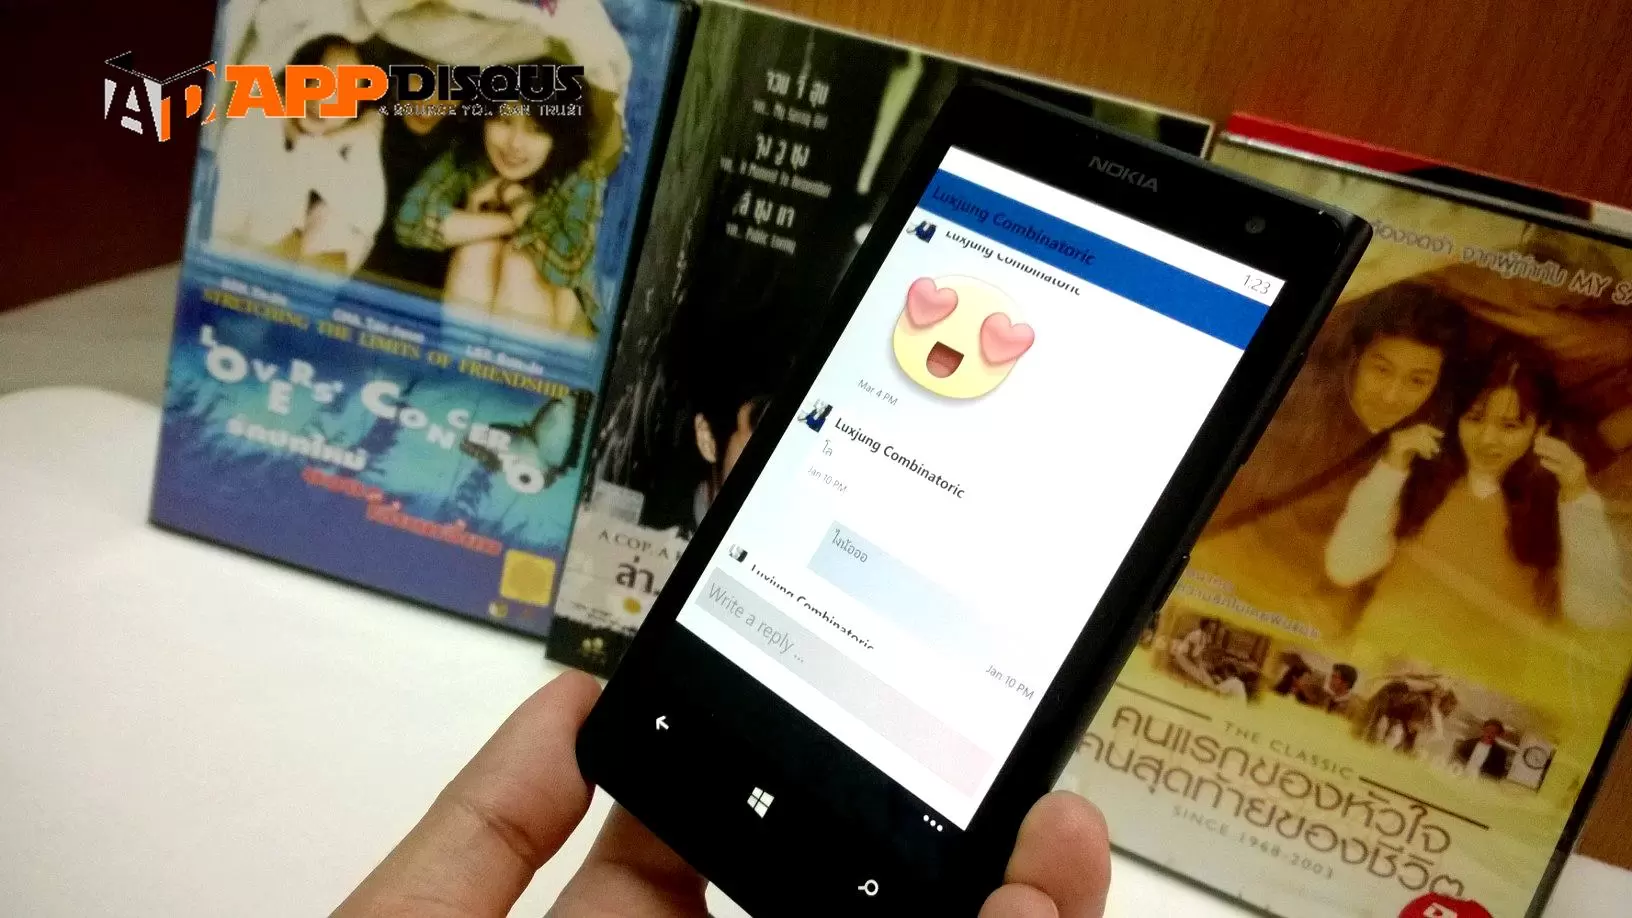 WP 20130918 13 26 07 Pro | Messenger HD | <!--:TH-->Facebook บน Windows Phone รับและส่งสติ๊กเกอร์ได้แล้ว!!? ด้วยแอพ Messenger HD ดาวน์โหลดไปสนุกกัน<!--:-->